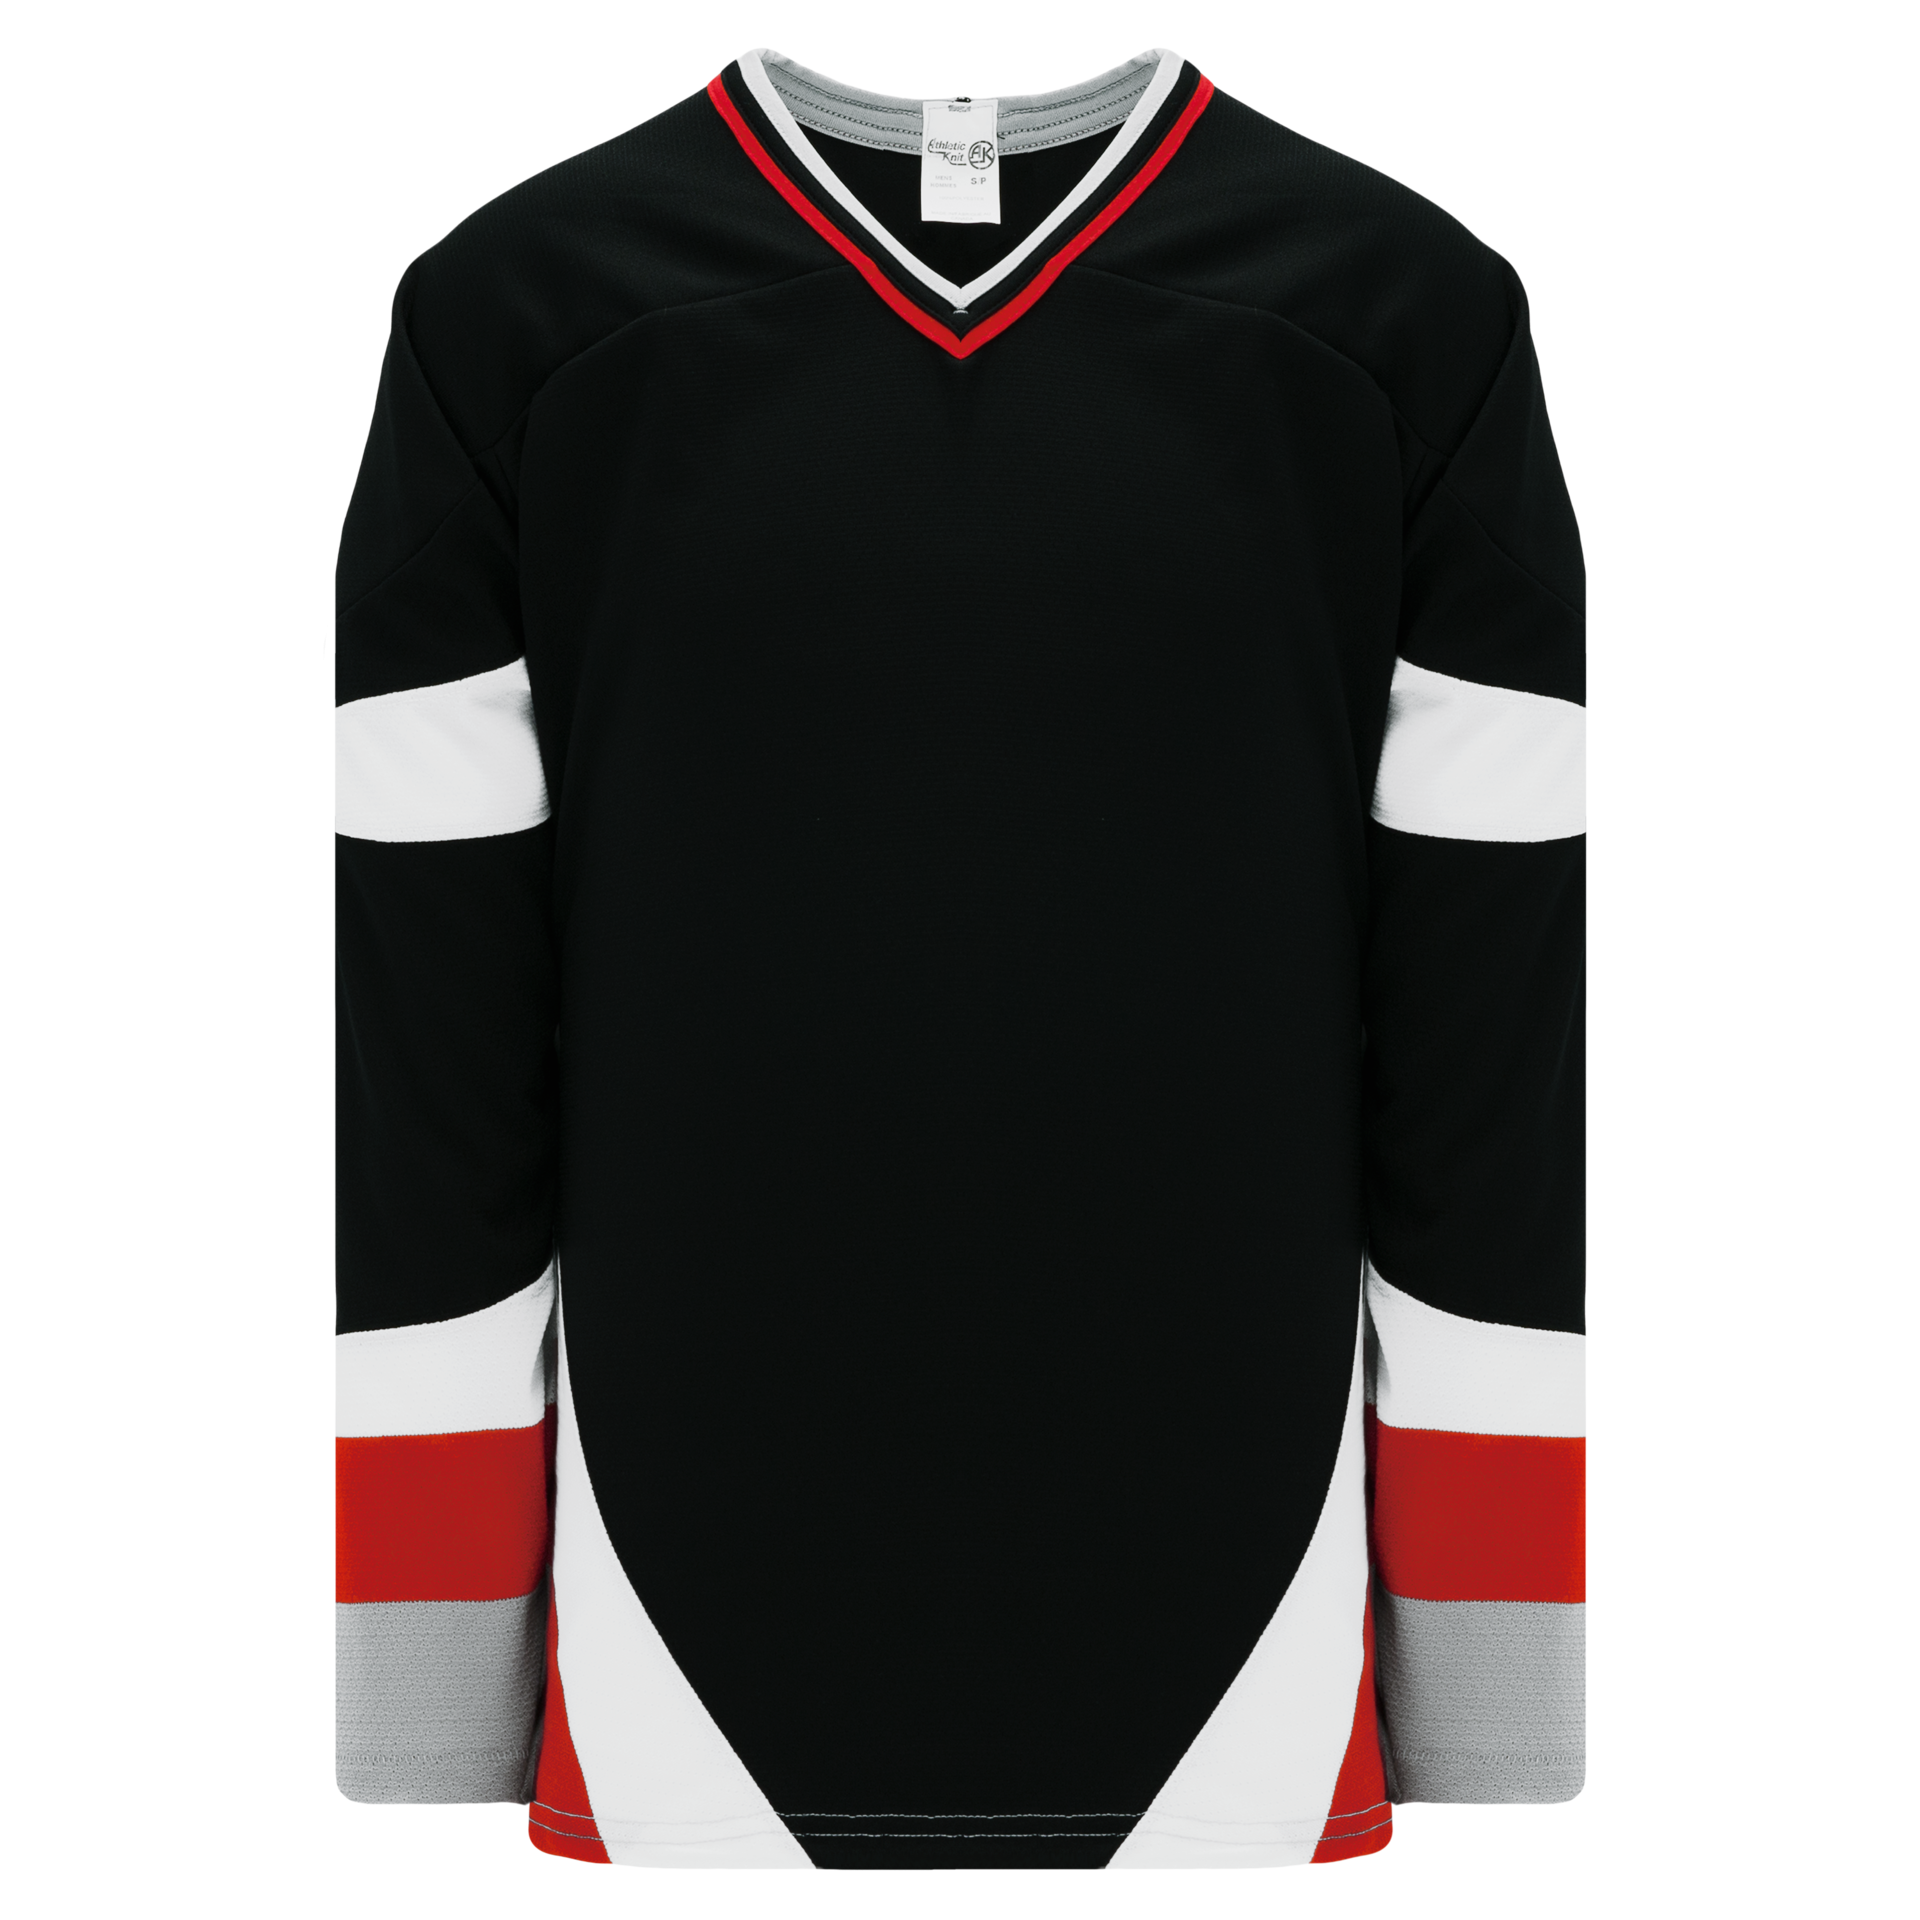 Athletic Knit H550CK Buffalo Sabres Knit Hockey Jersey